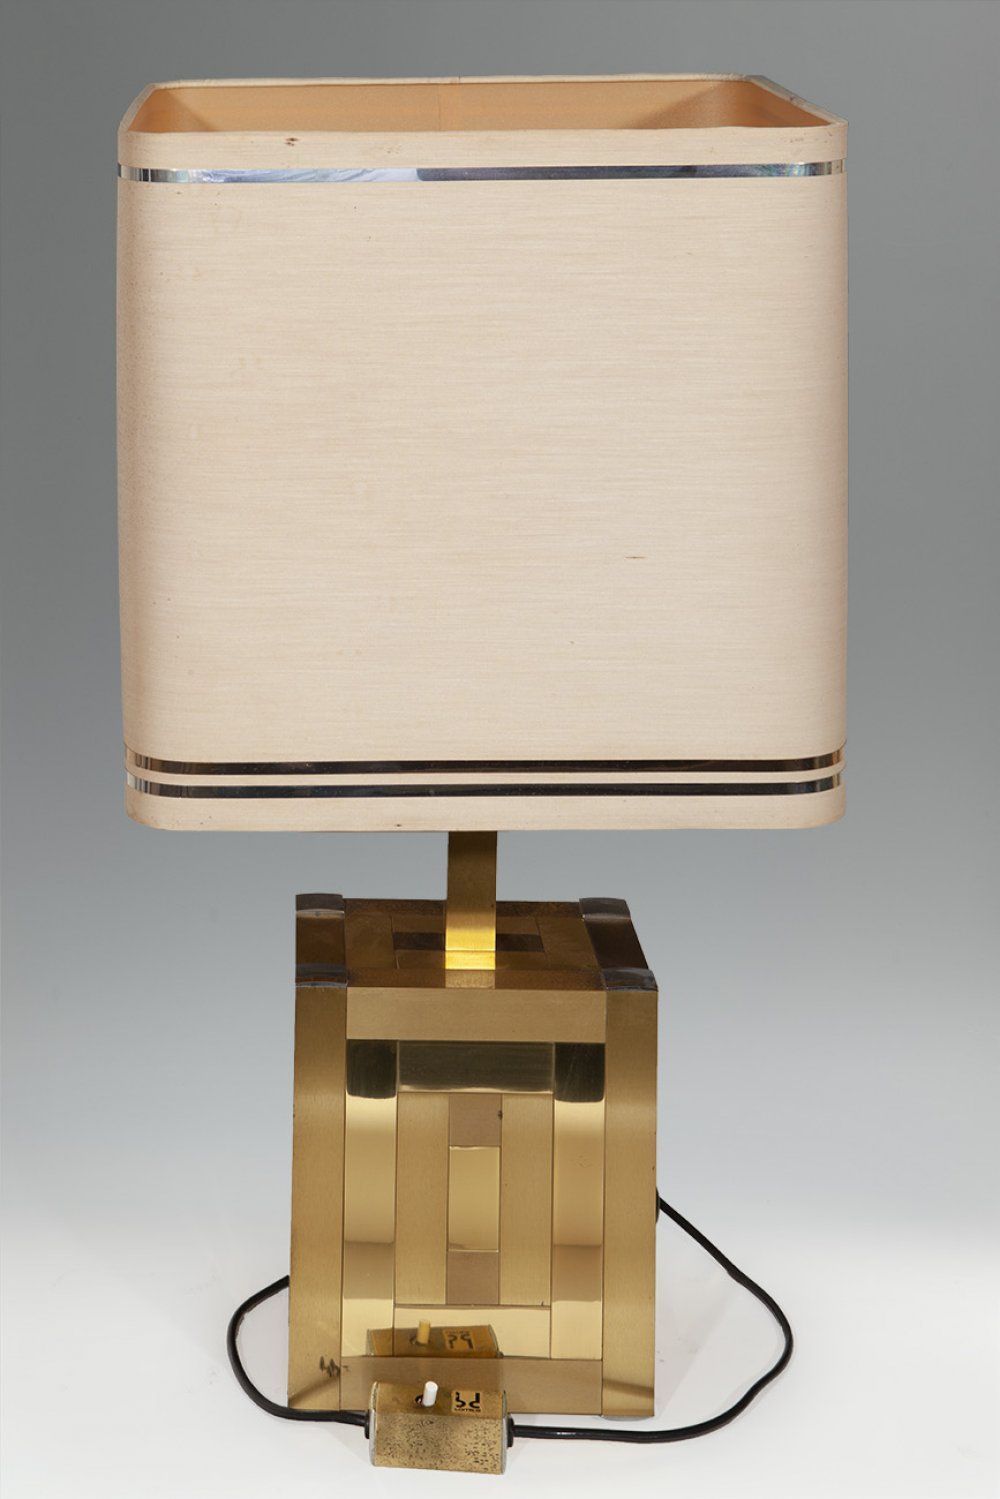 WILLY RIZZO (Naples, 1928-Paris, 2013). 
台灯；意大利，约1970年。为Luminica设计。
基座为镀铬钢和黄铜，灯罩&hellip;